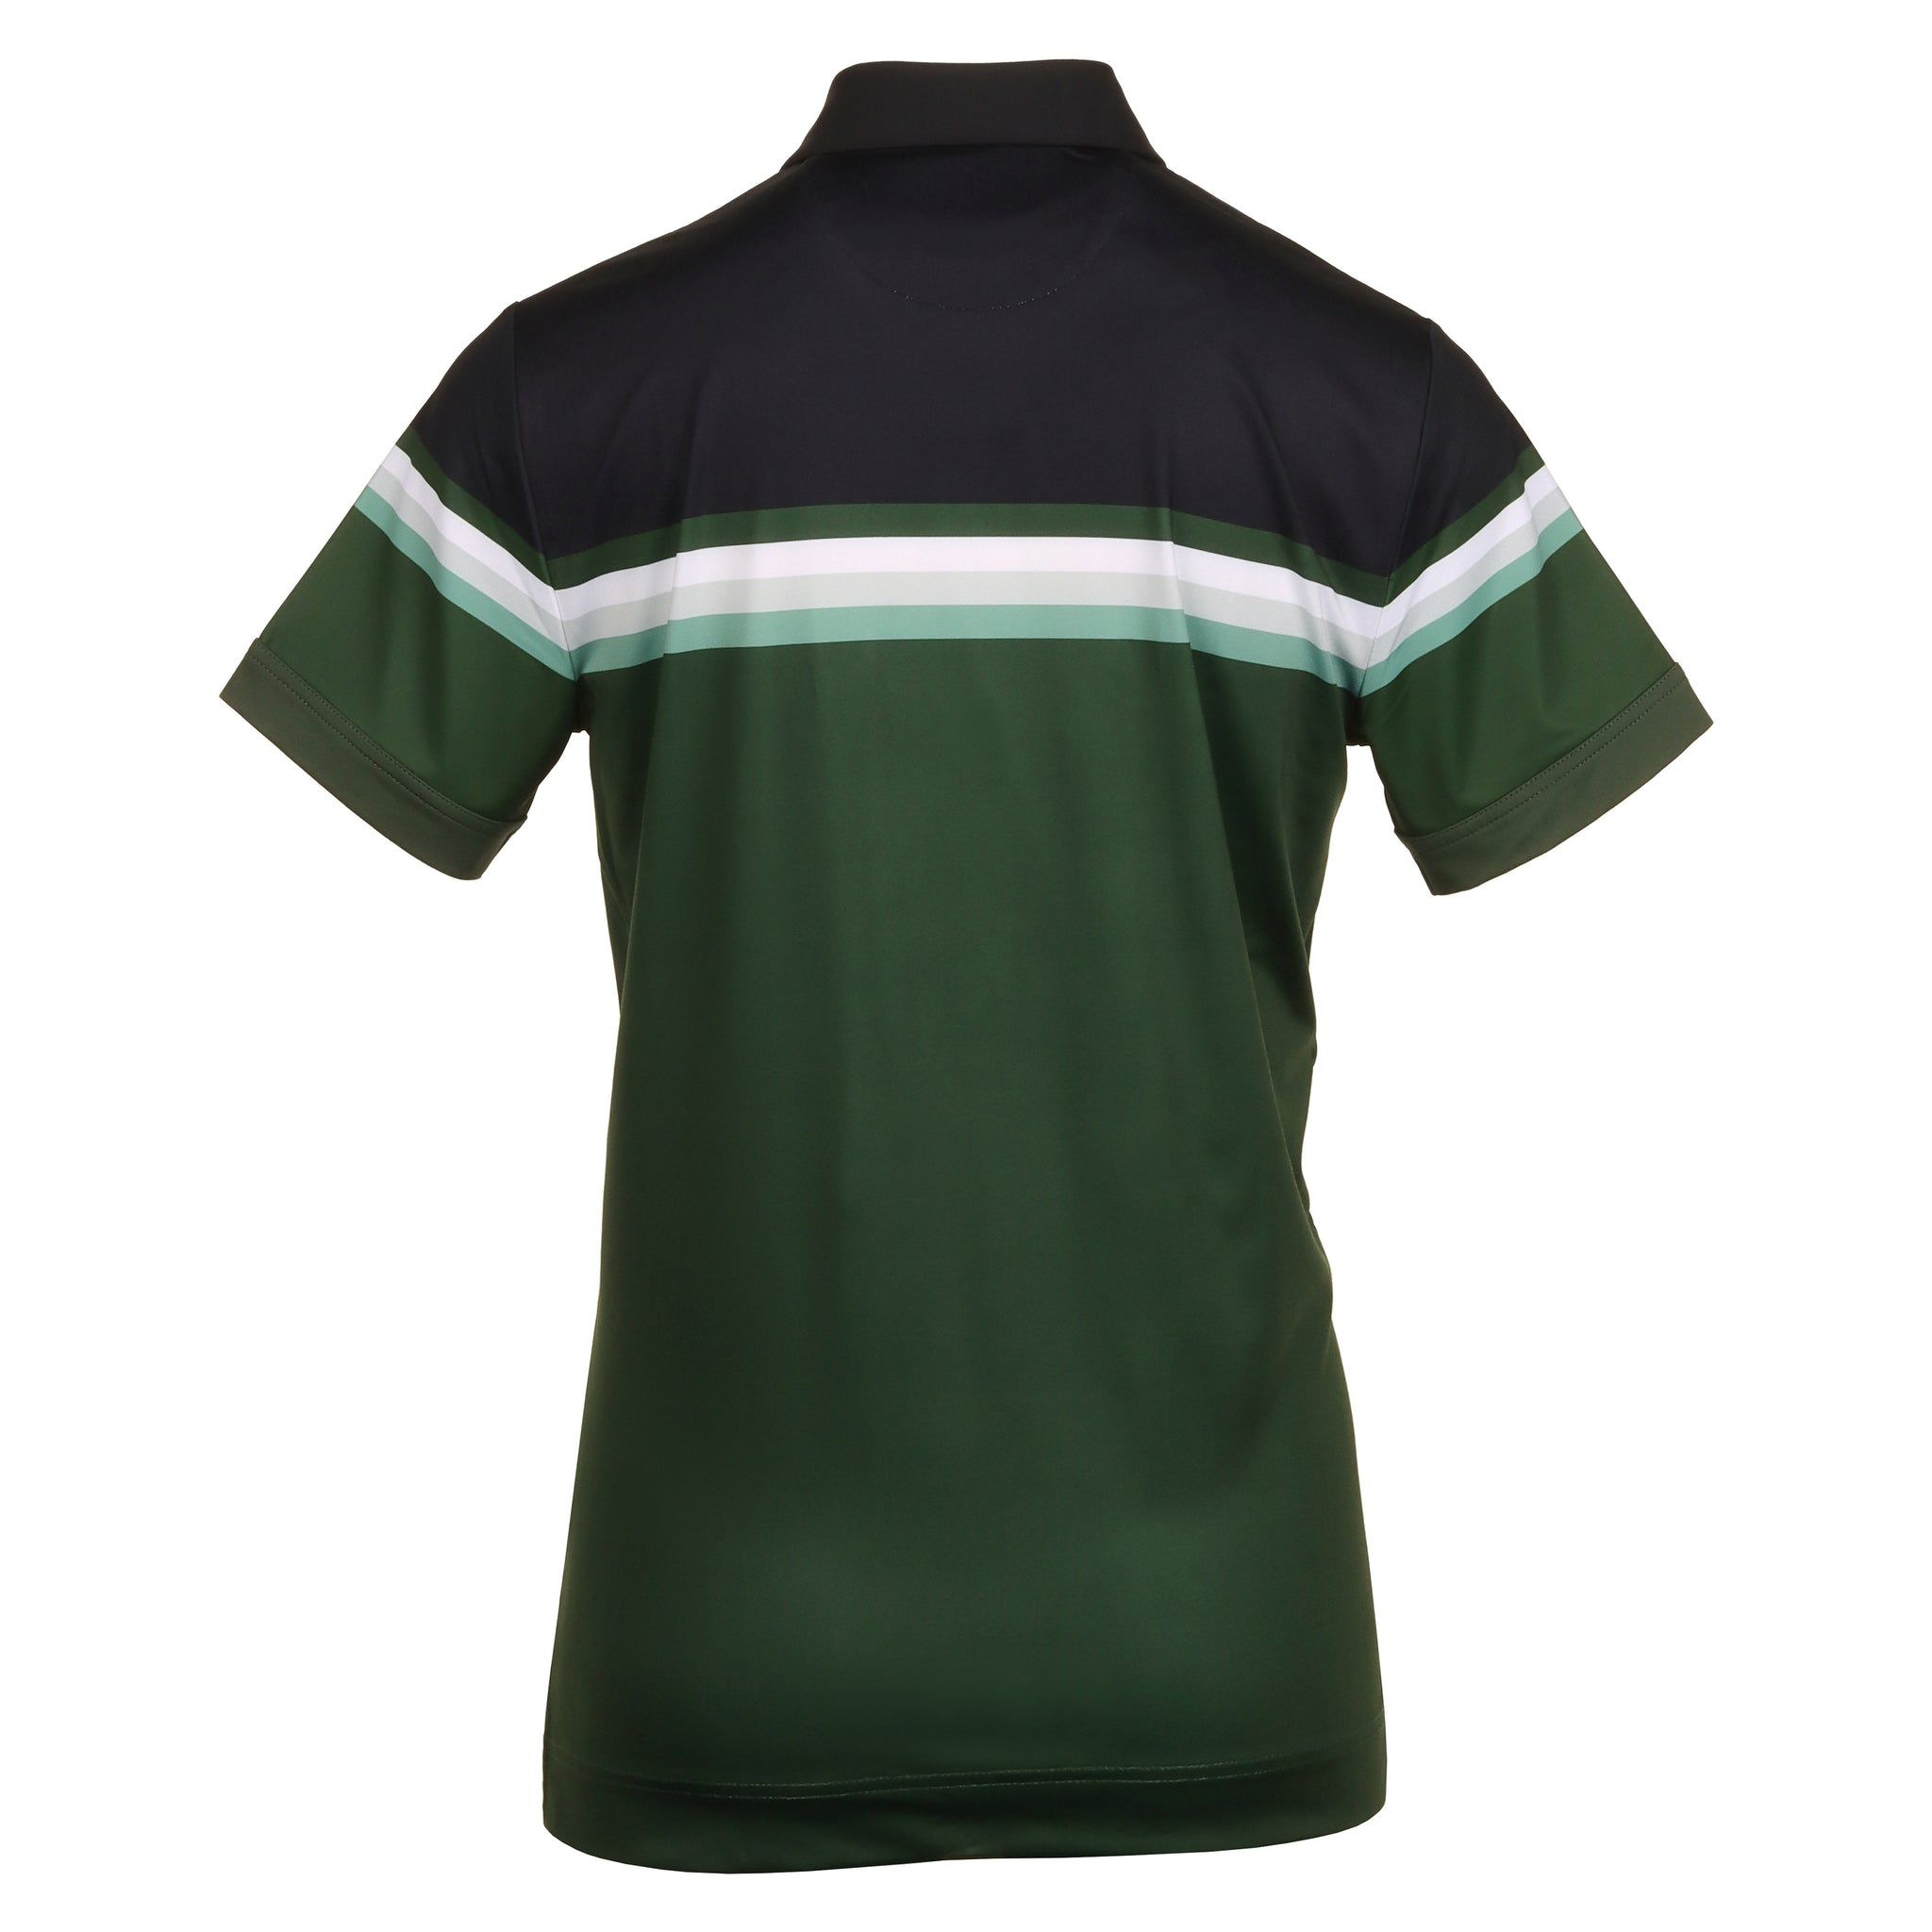 Callaway Golf X-Series Racer Chev Block Shirt